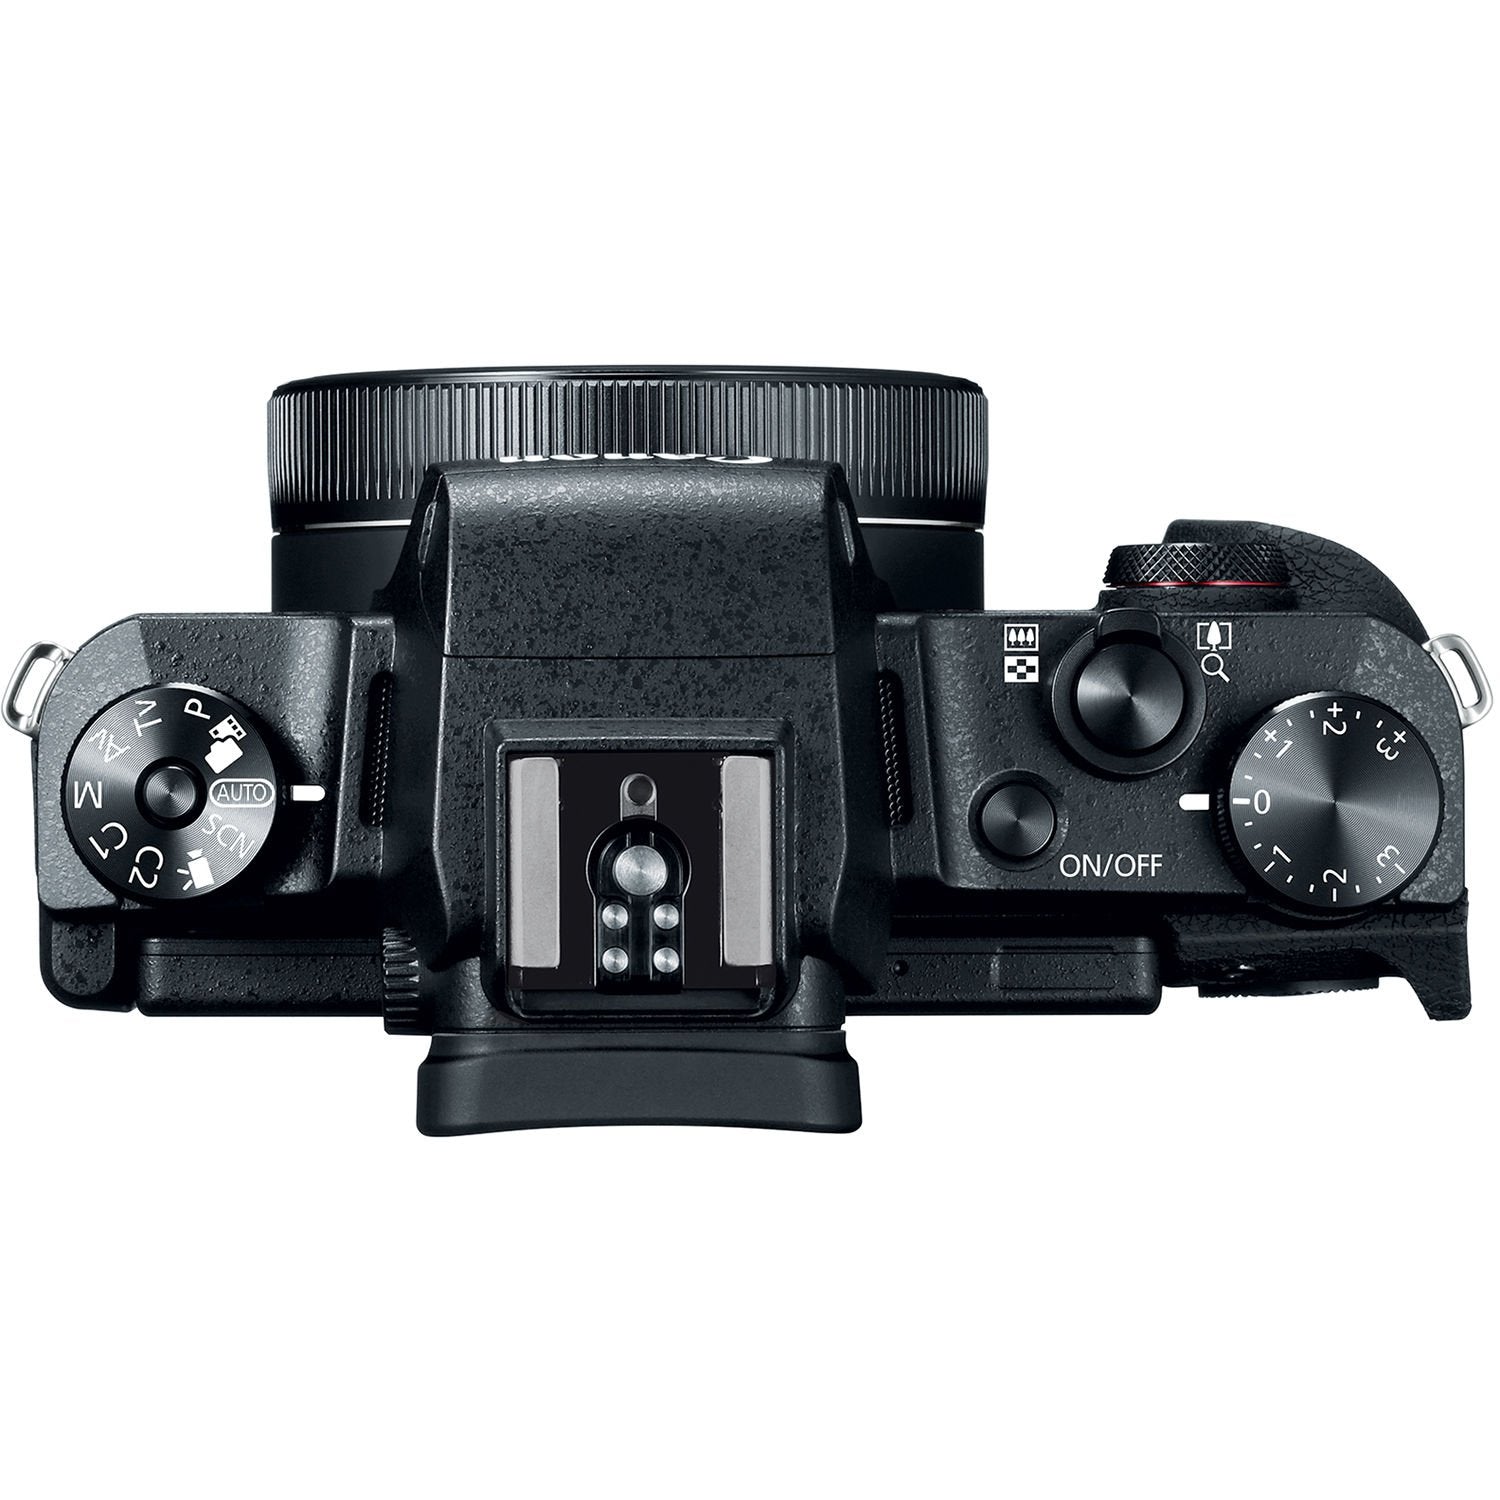 Canon PowerShot G1 X Mark III Digital Camera #2208C001 International Version (No Warranty) Starter Bundle